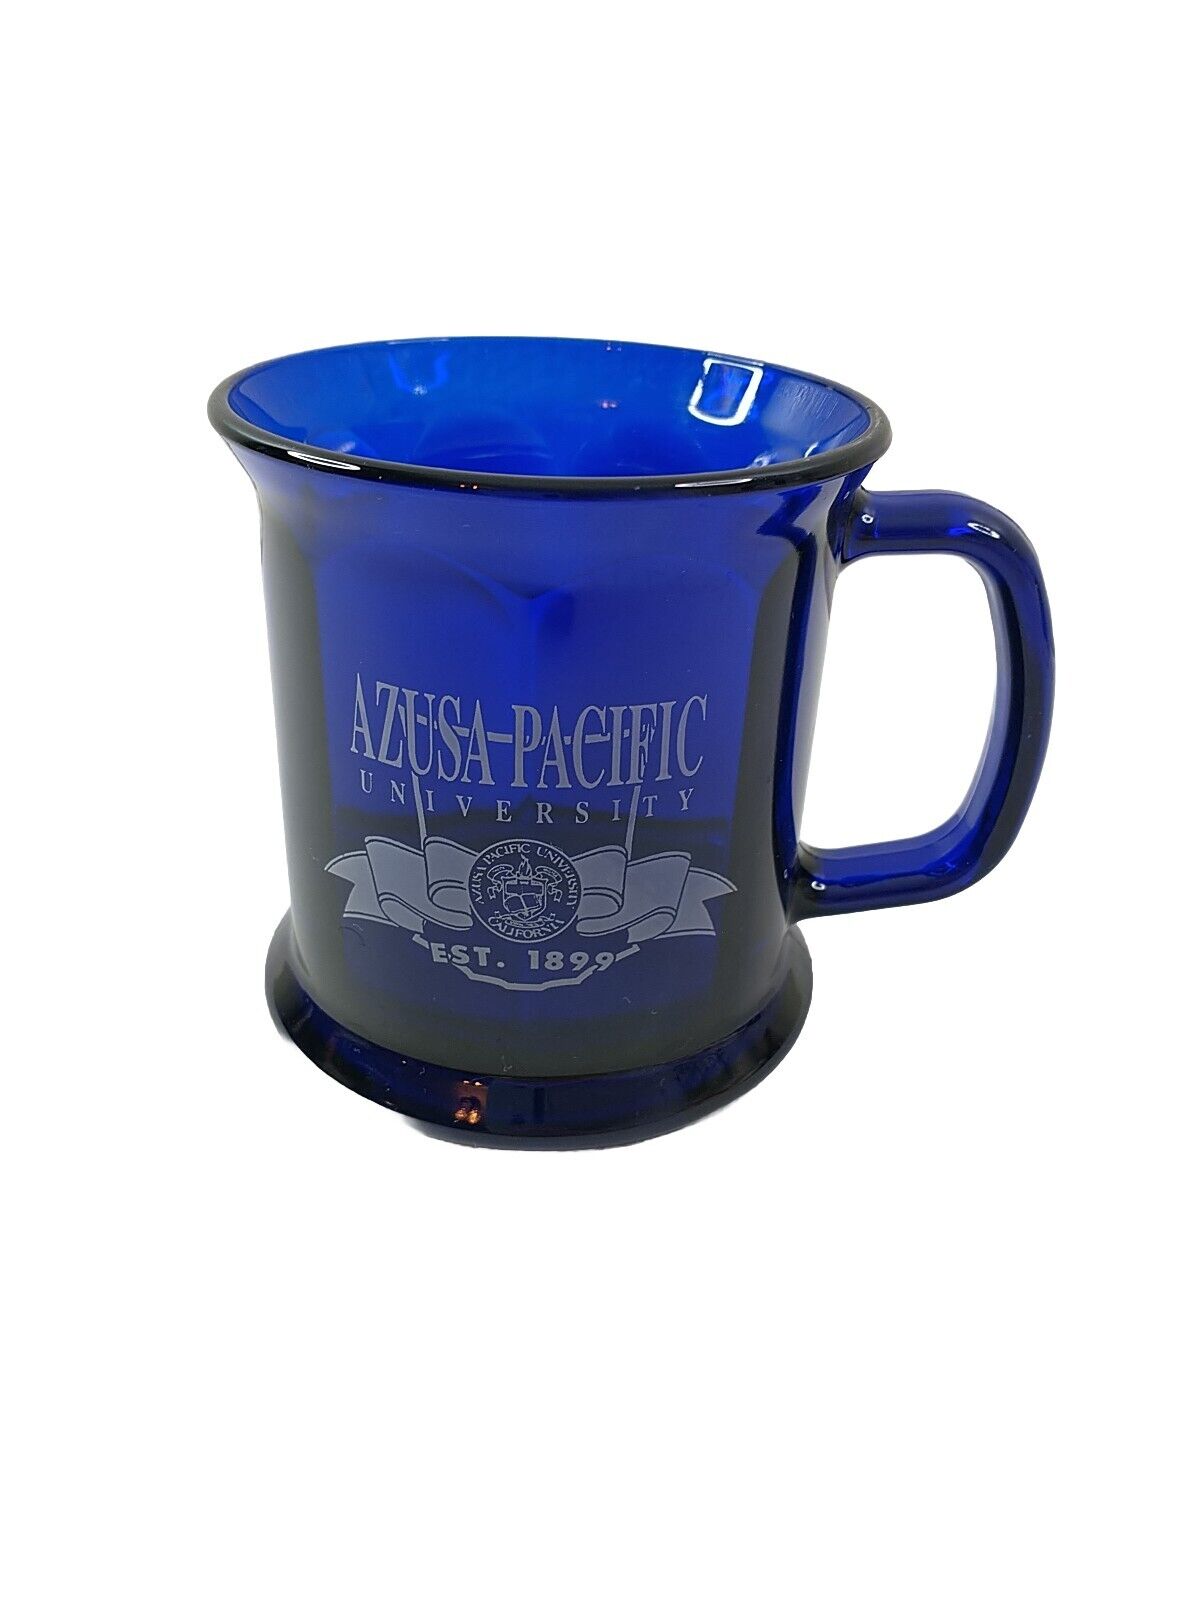 Vintage 1995 Azusa Pacific University Cobalt Blue Glass Mug Cup